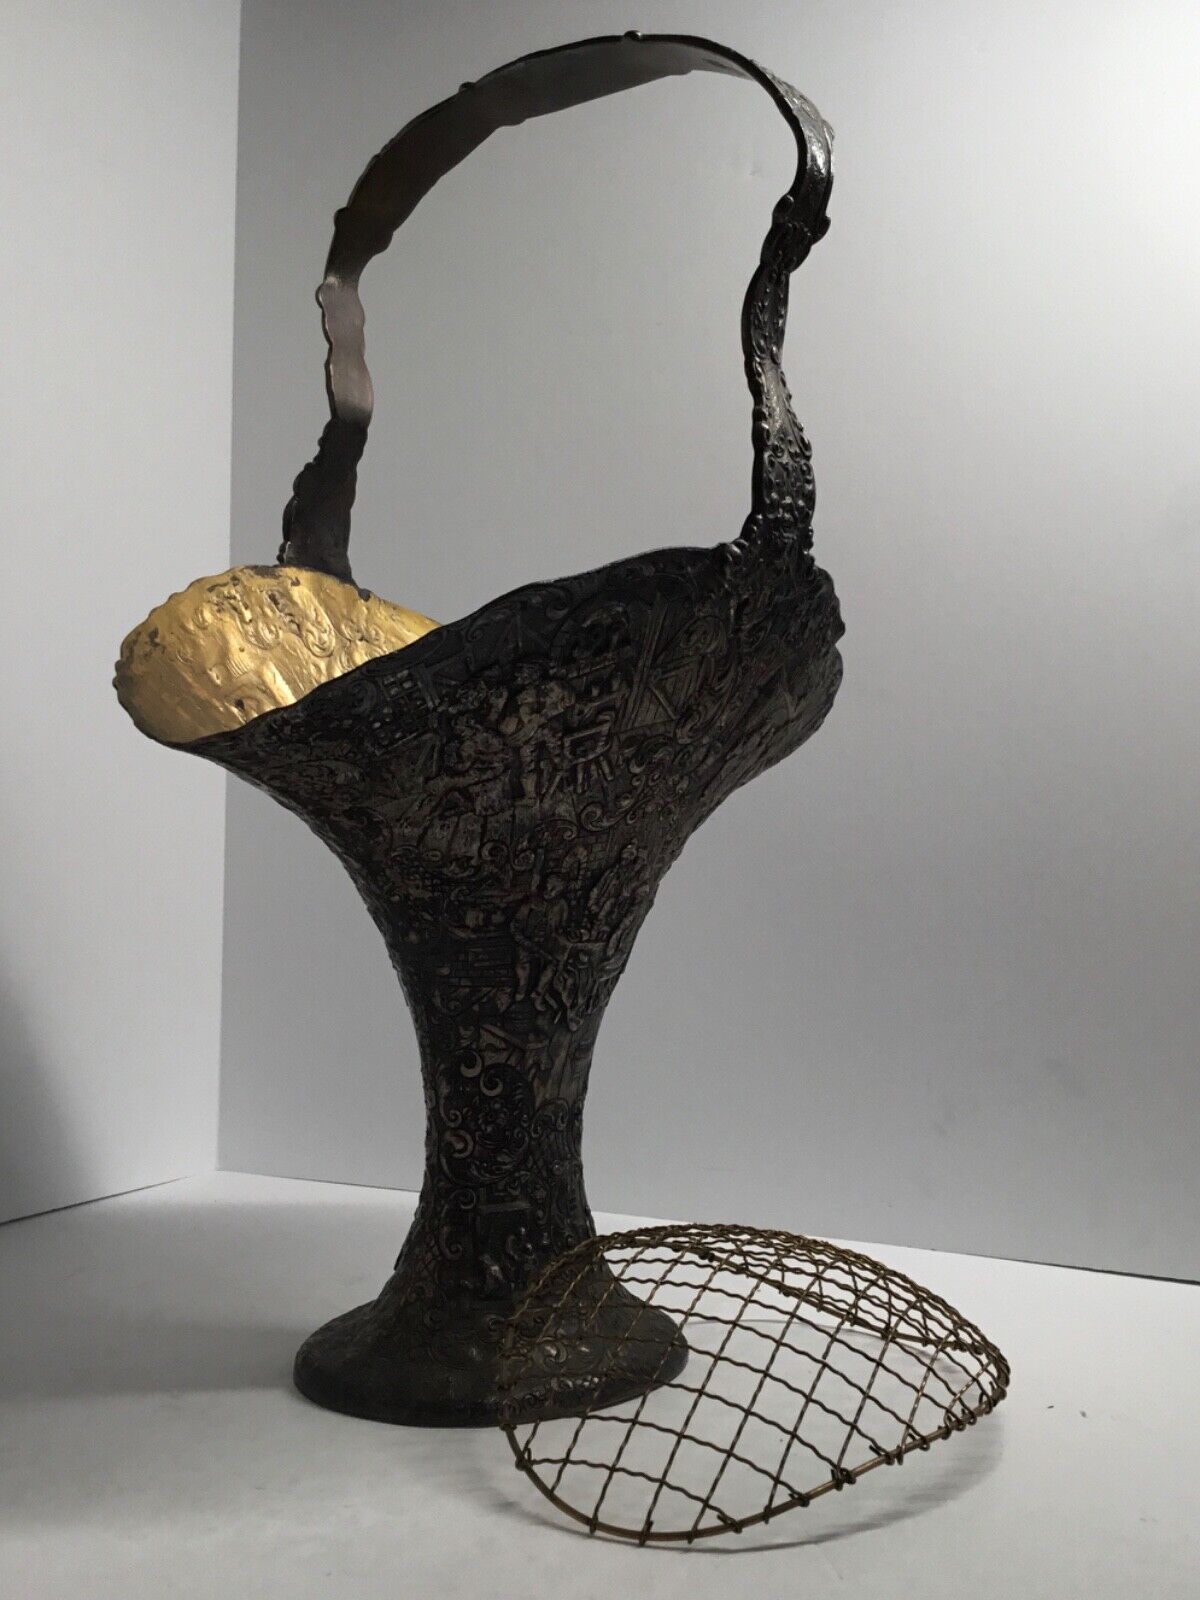 Vase Victorian Bride’s Basket frog Antique silver gold repousse emboss handle